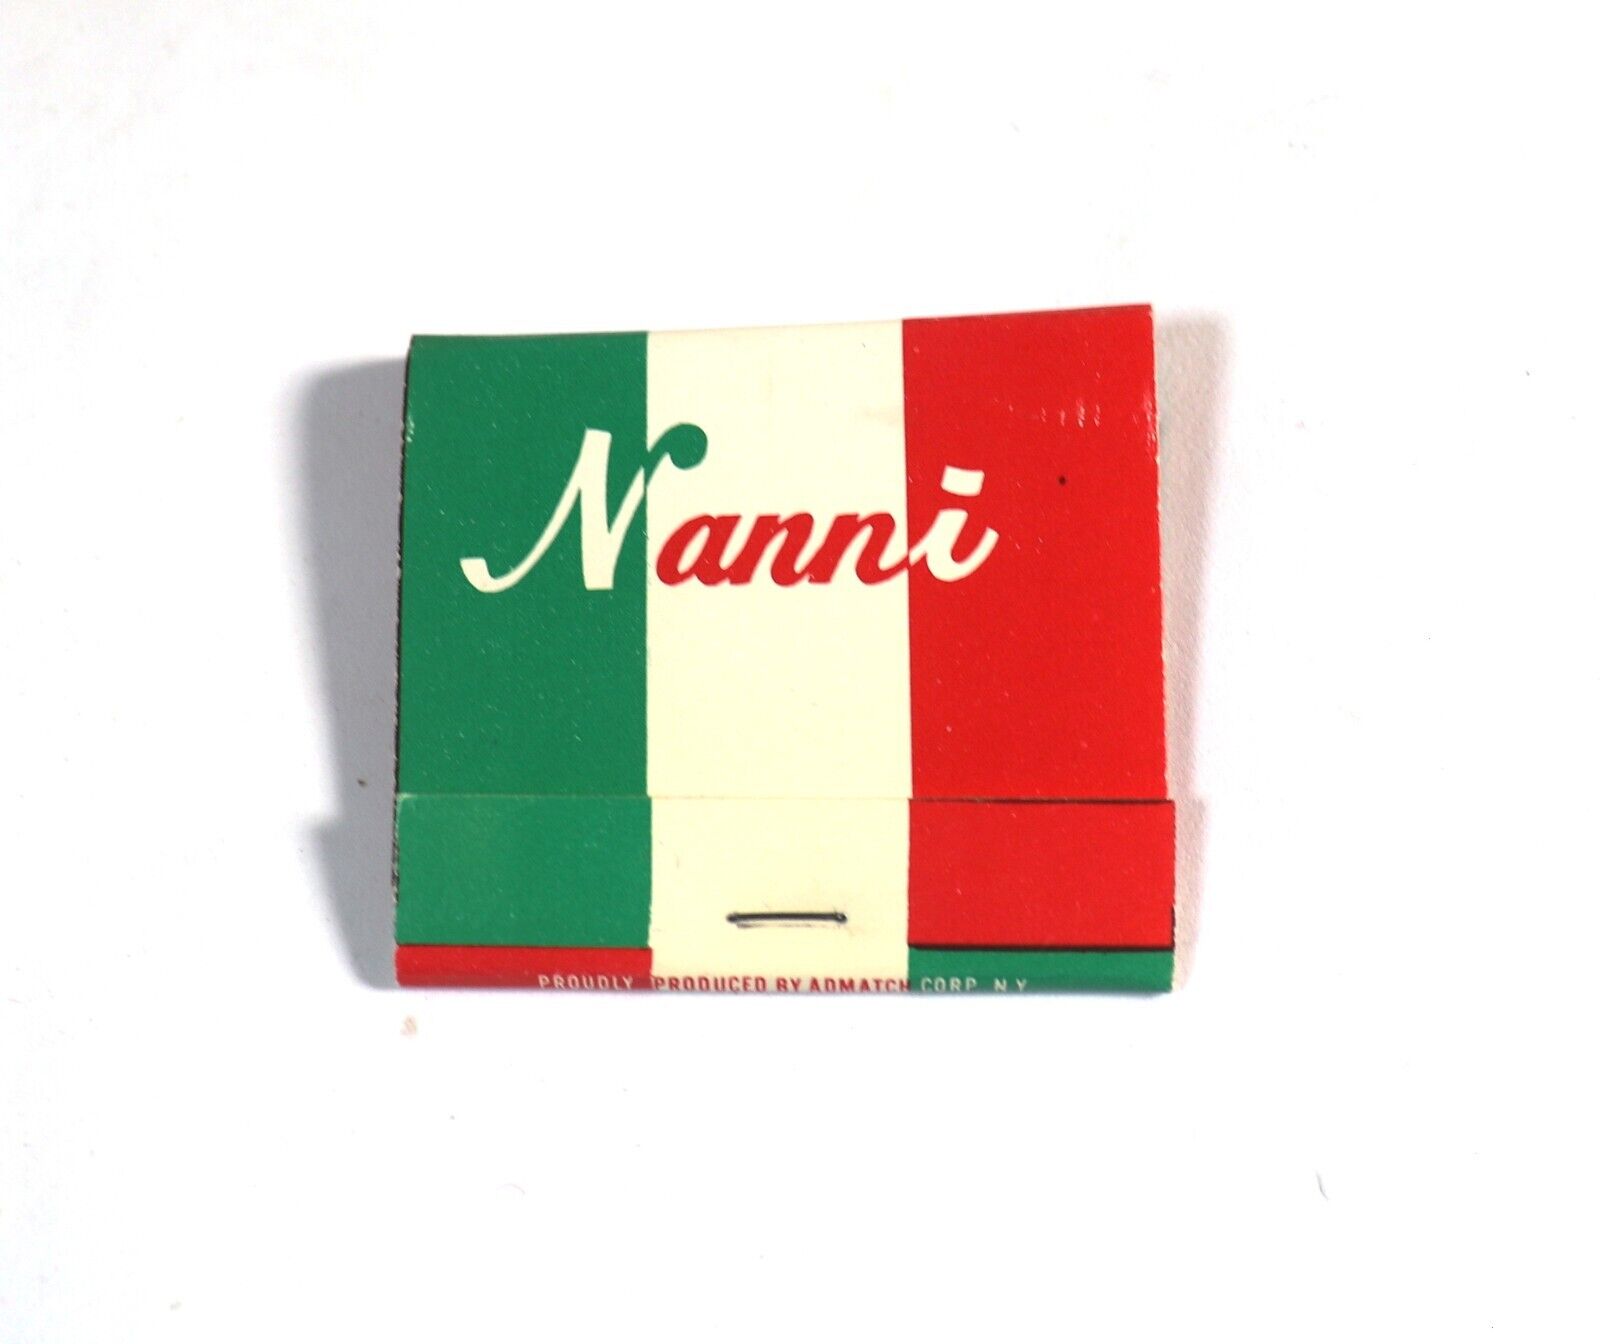 Vintage Nanni Cucina Restaurant New York City Full Matchbook Unused Admatch Corp